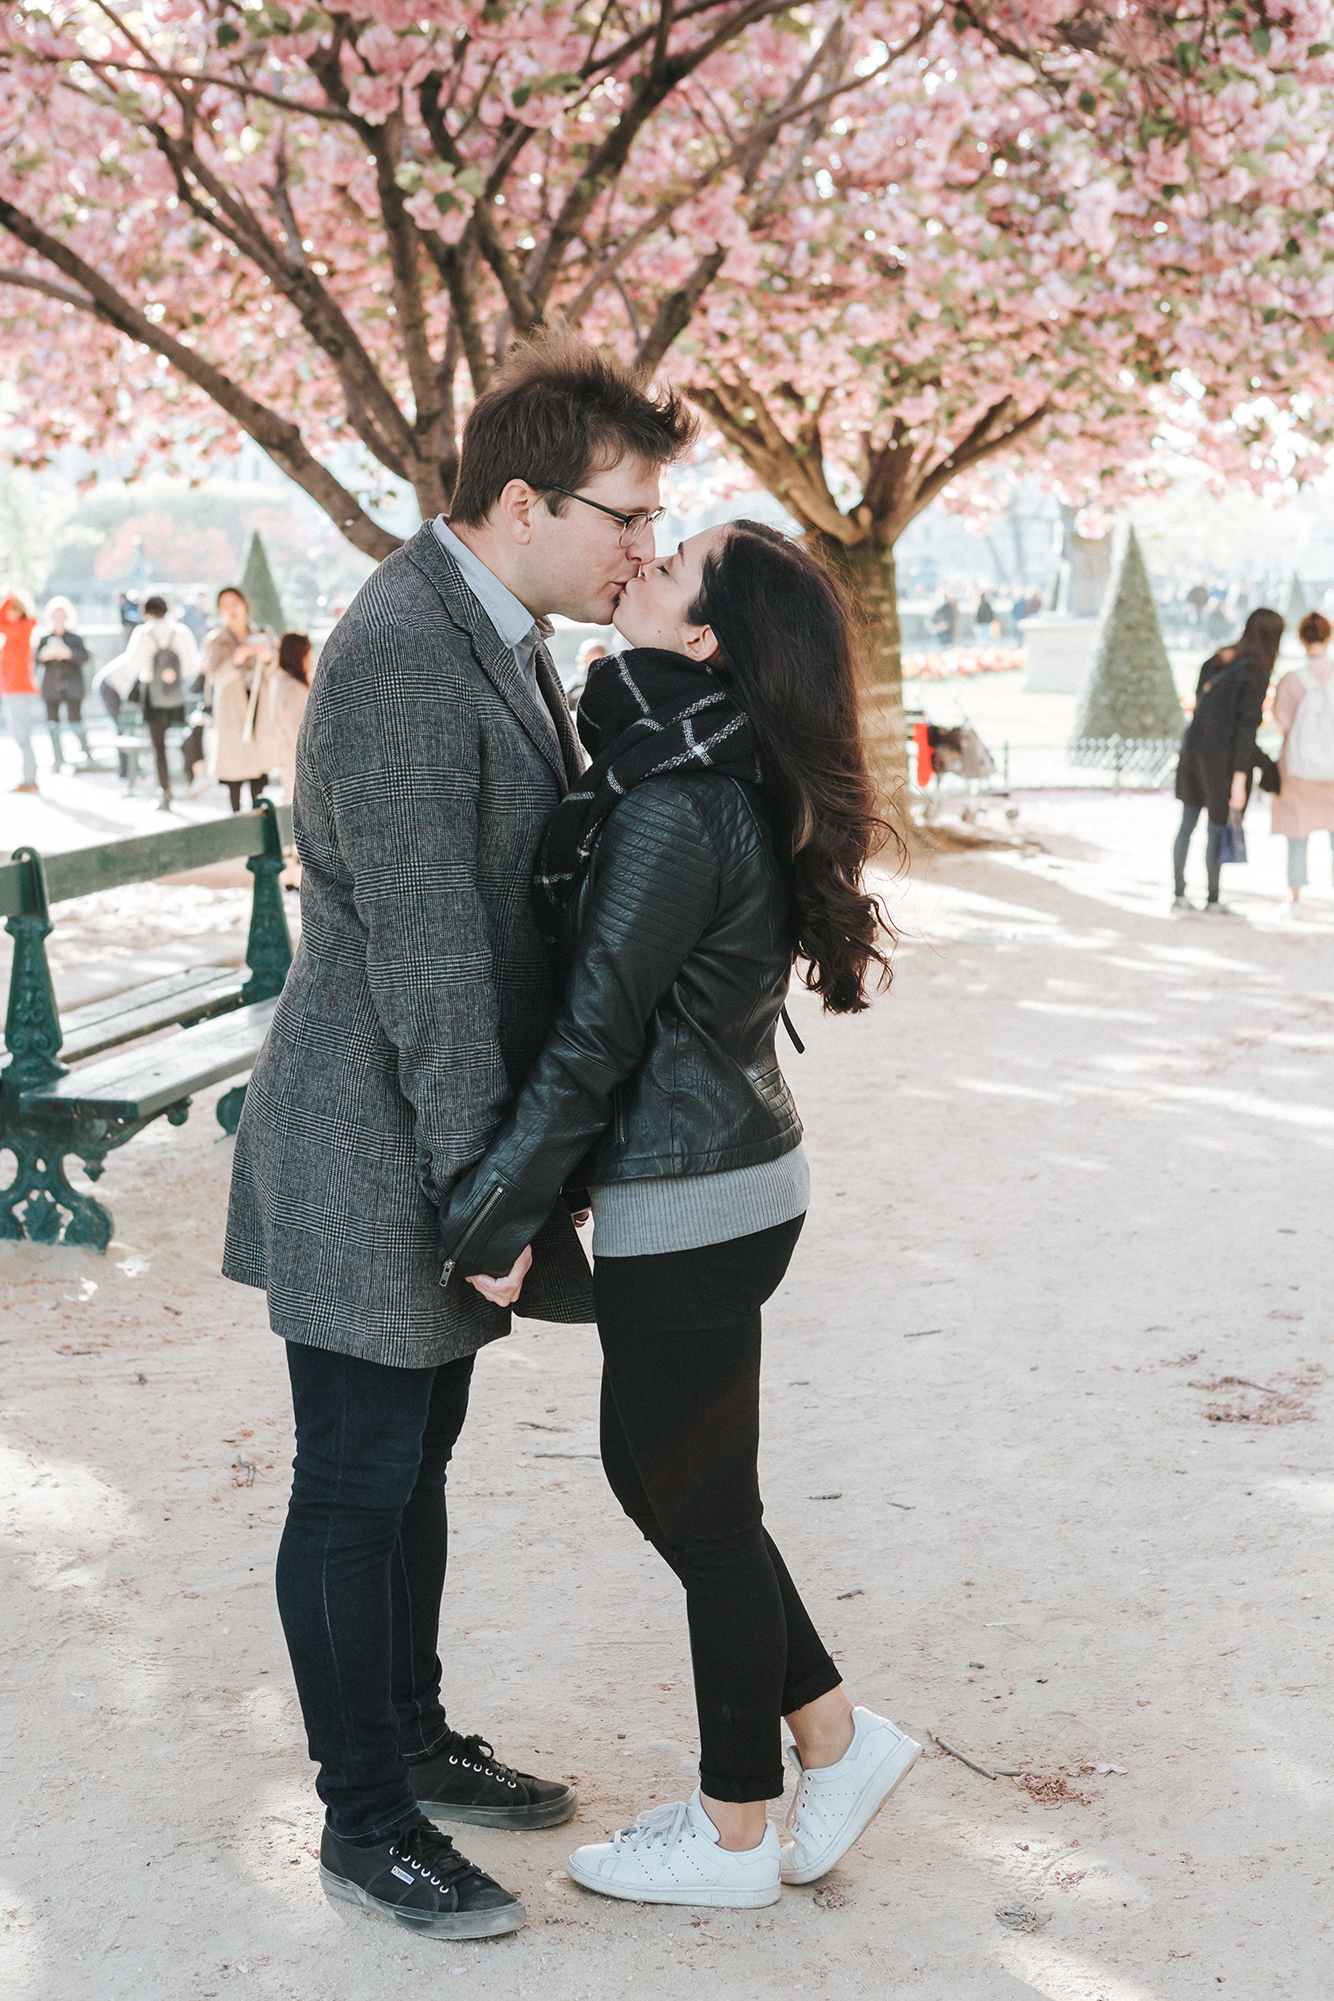 Fashion blogger Cee Fardoe of Coco & Vera kisses her partner under a cherry blossom tree